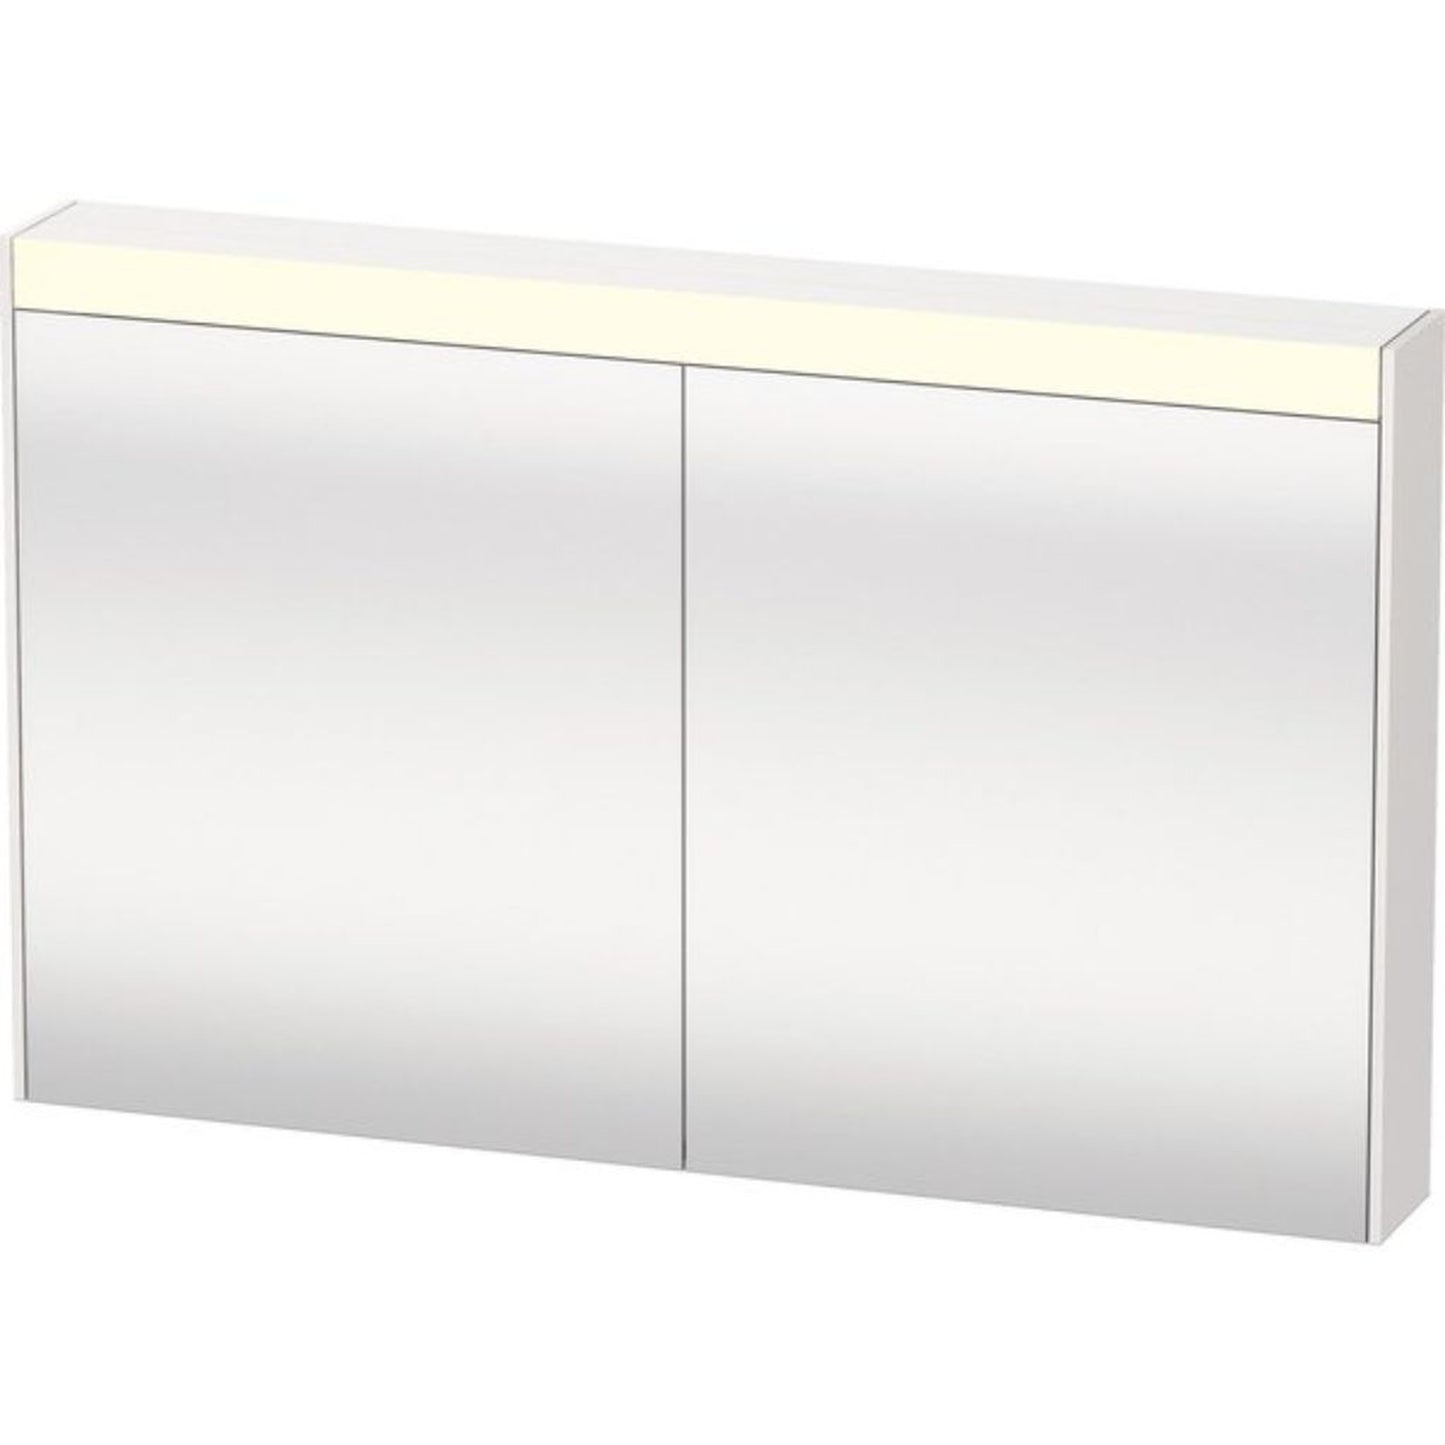 Duravit Brioso 40" x 30" x 6" Mirror Cabinet With Lighting White High Gloss